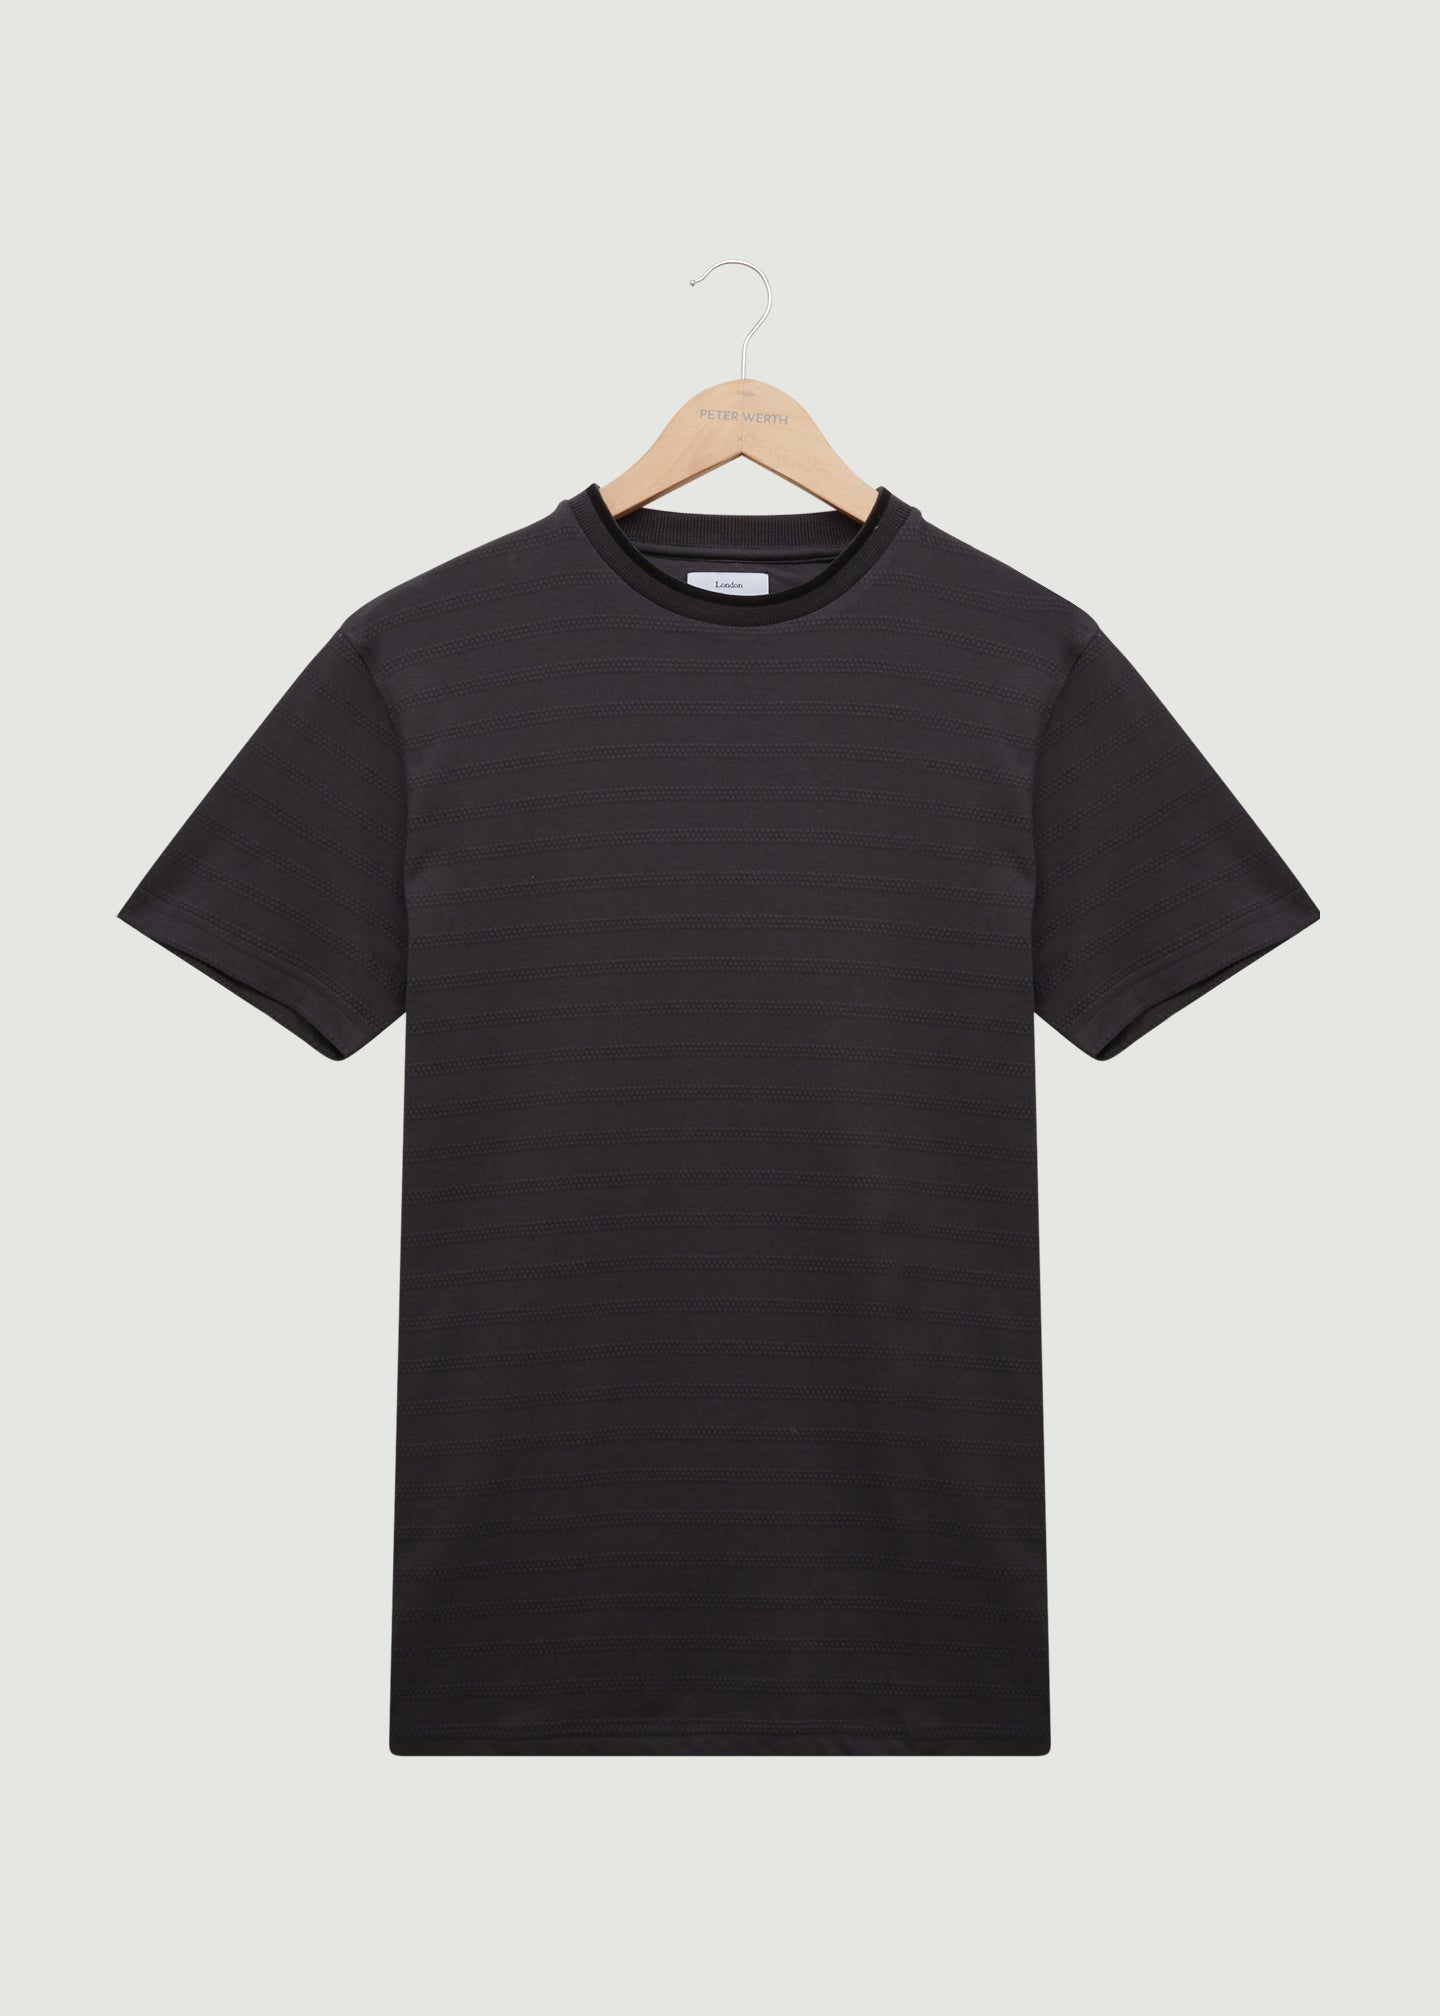 Halow T Shirt - Charcoal